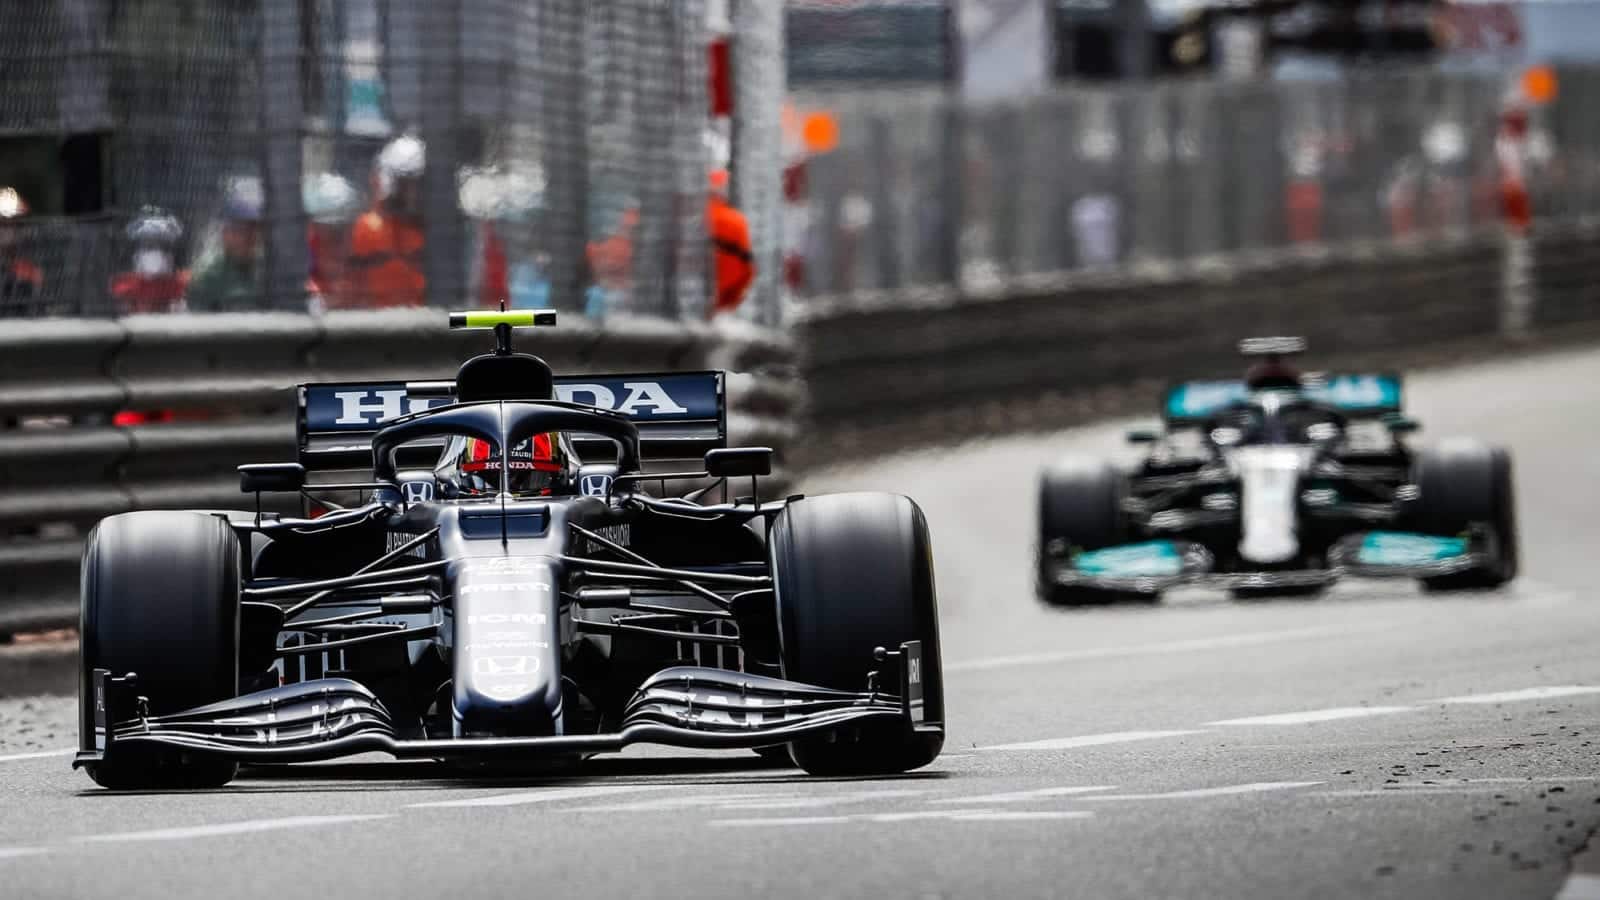 Pierre Gasly leads Lewis Hamilton at the 2021 Monaco Grand Prix